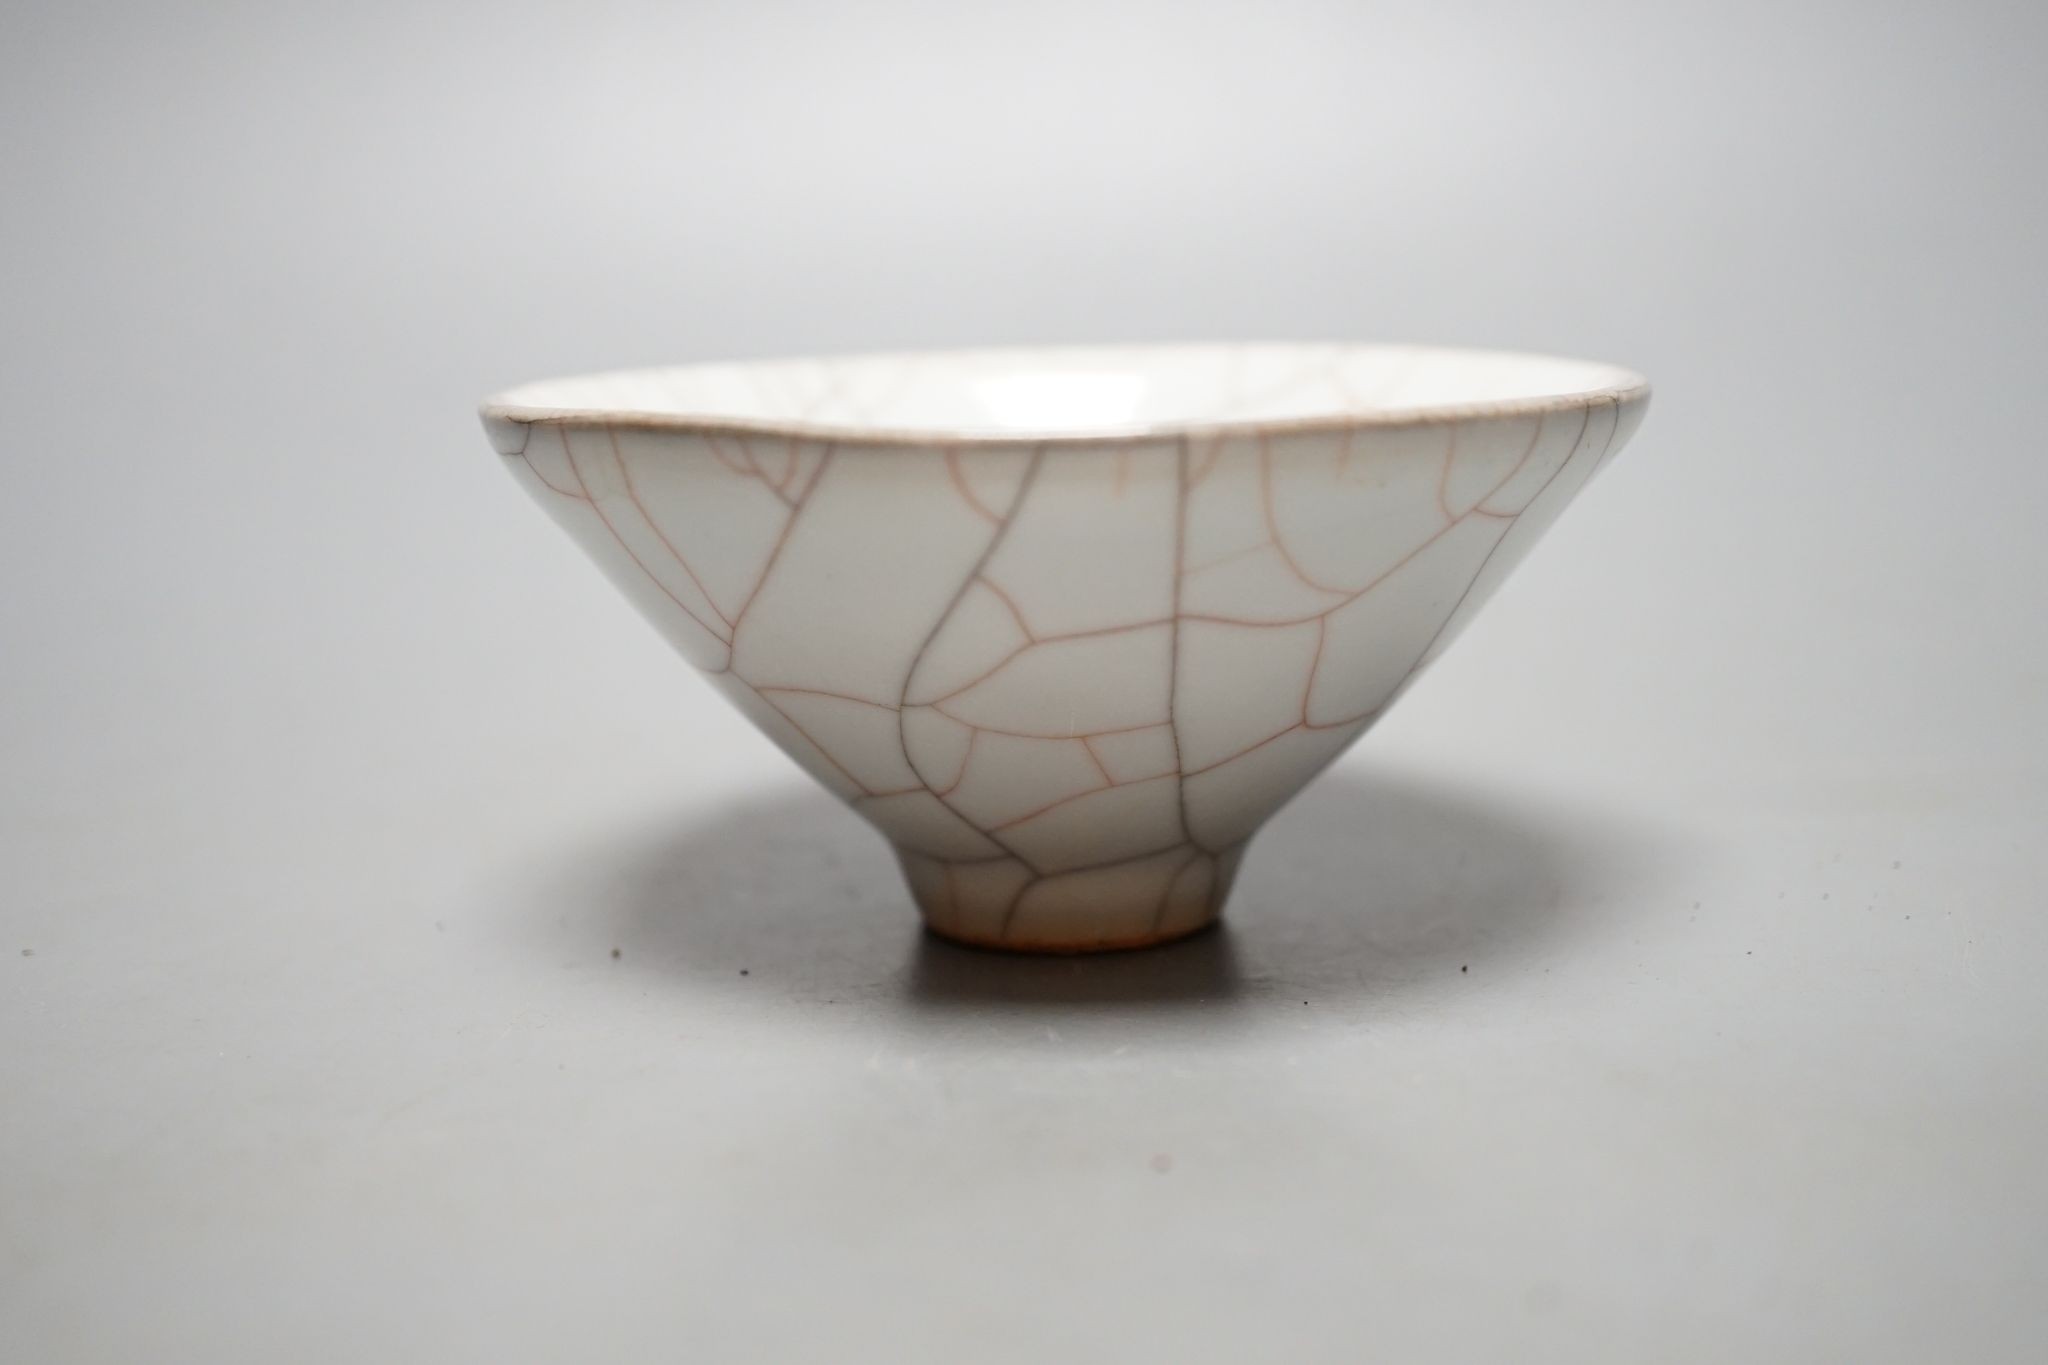 A Chinese crackle glaze bowl, 5cms high.